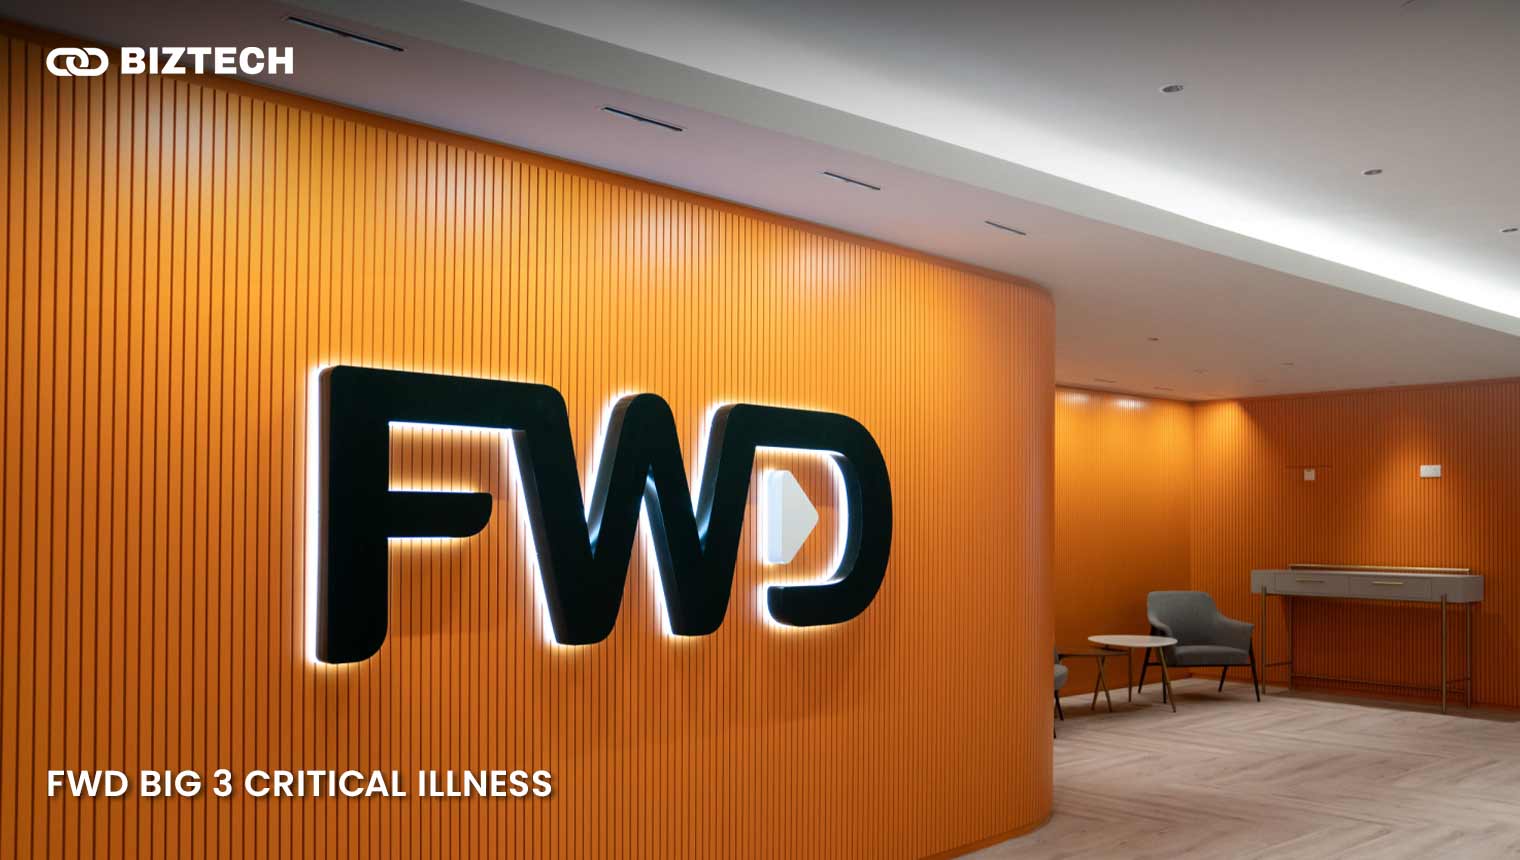 FWD Big 3 Critical Illness